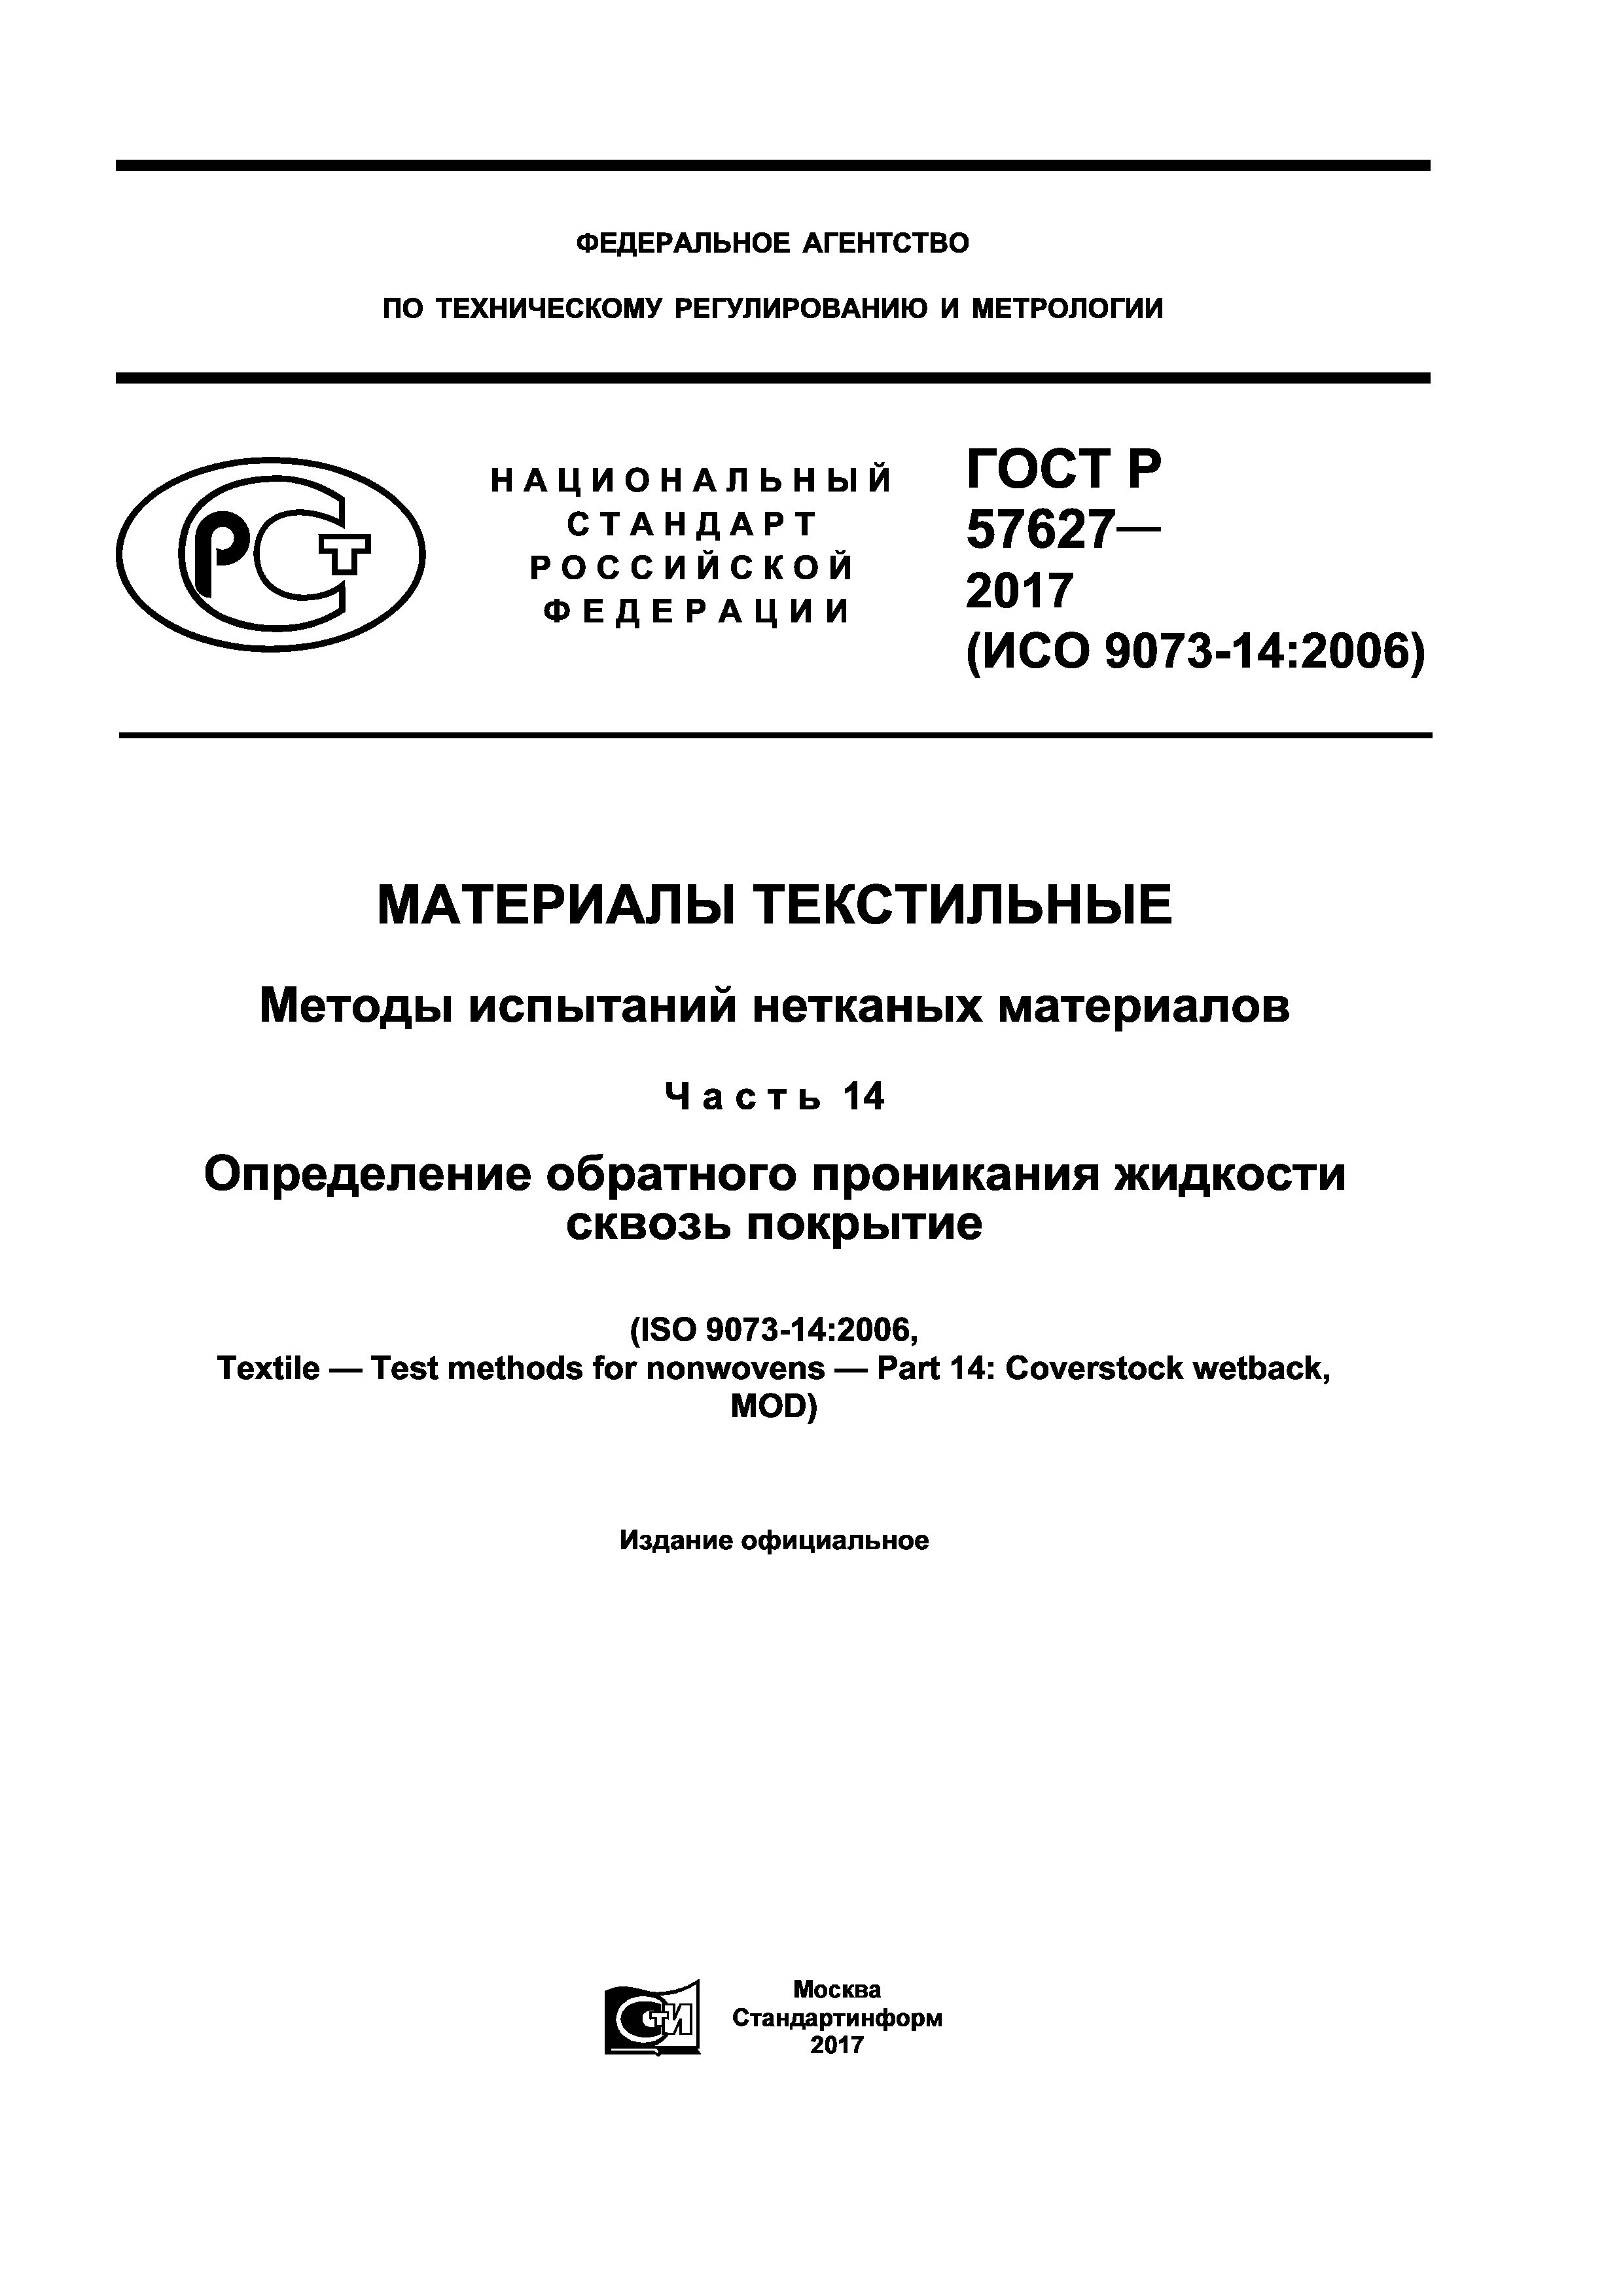 ГОСТ Р 57627-2017